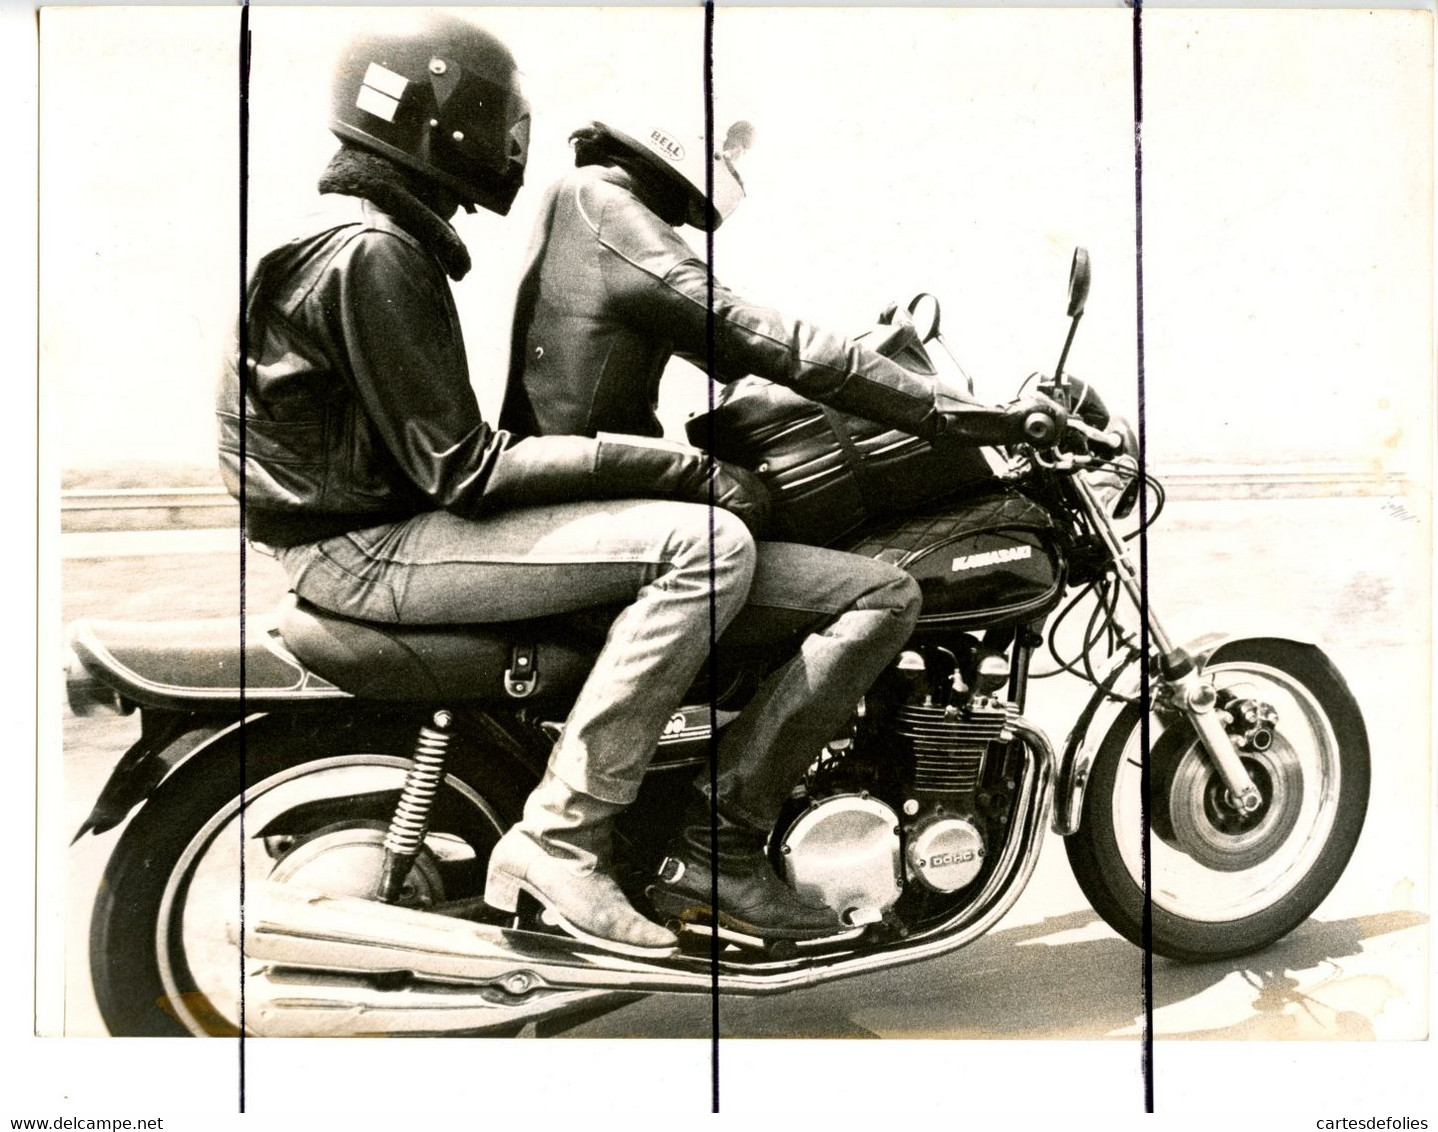 moto ancienne Photos